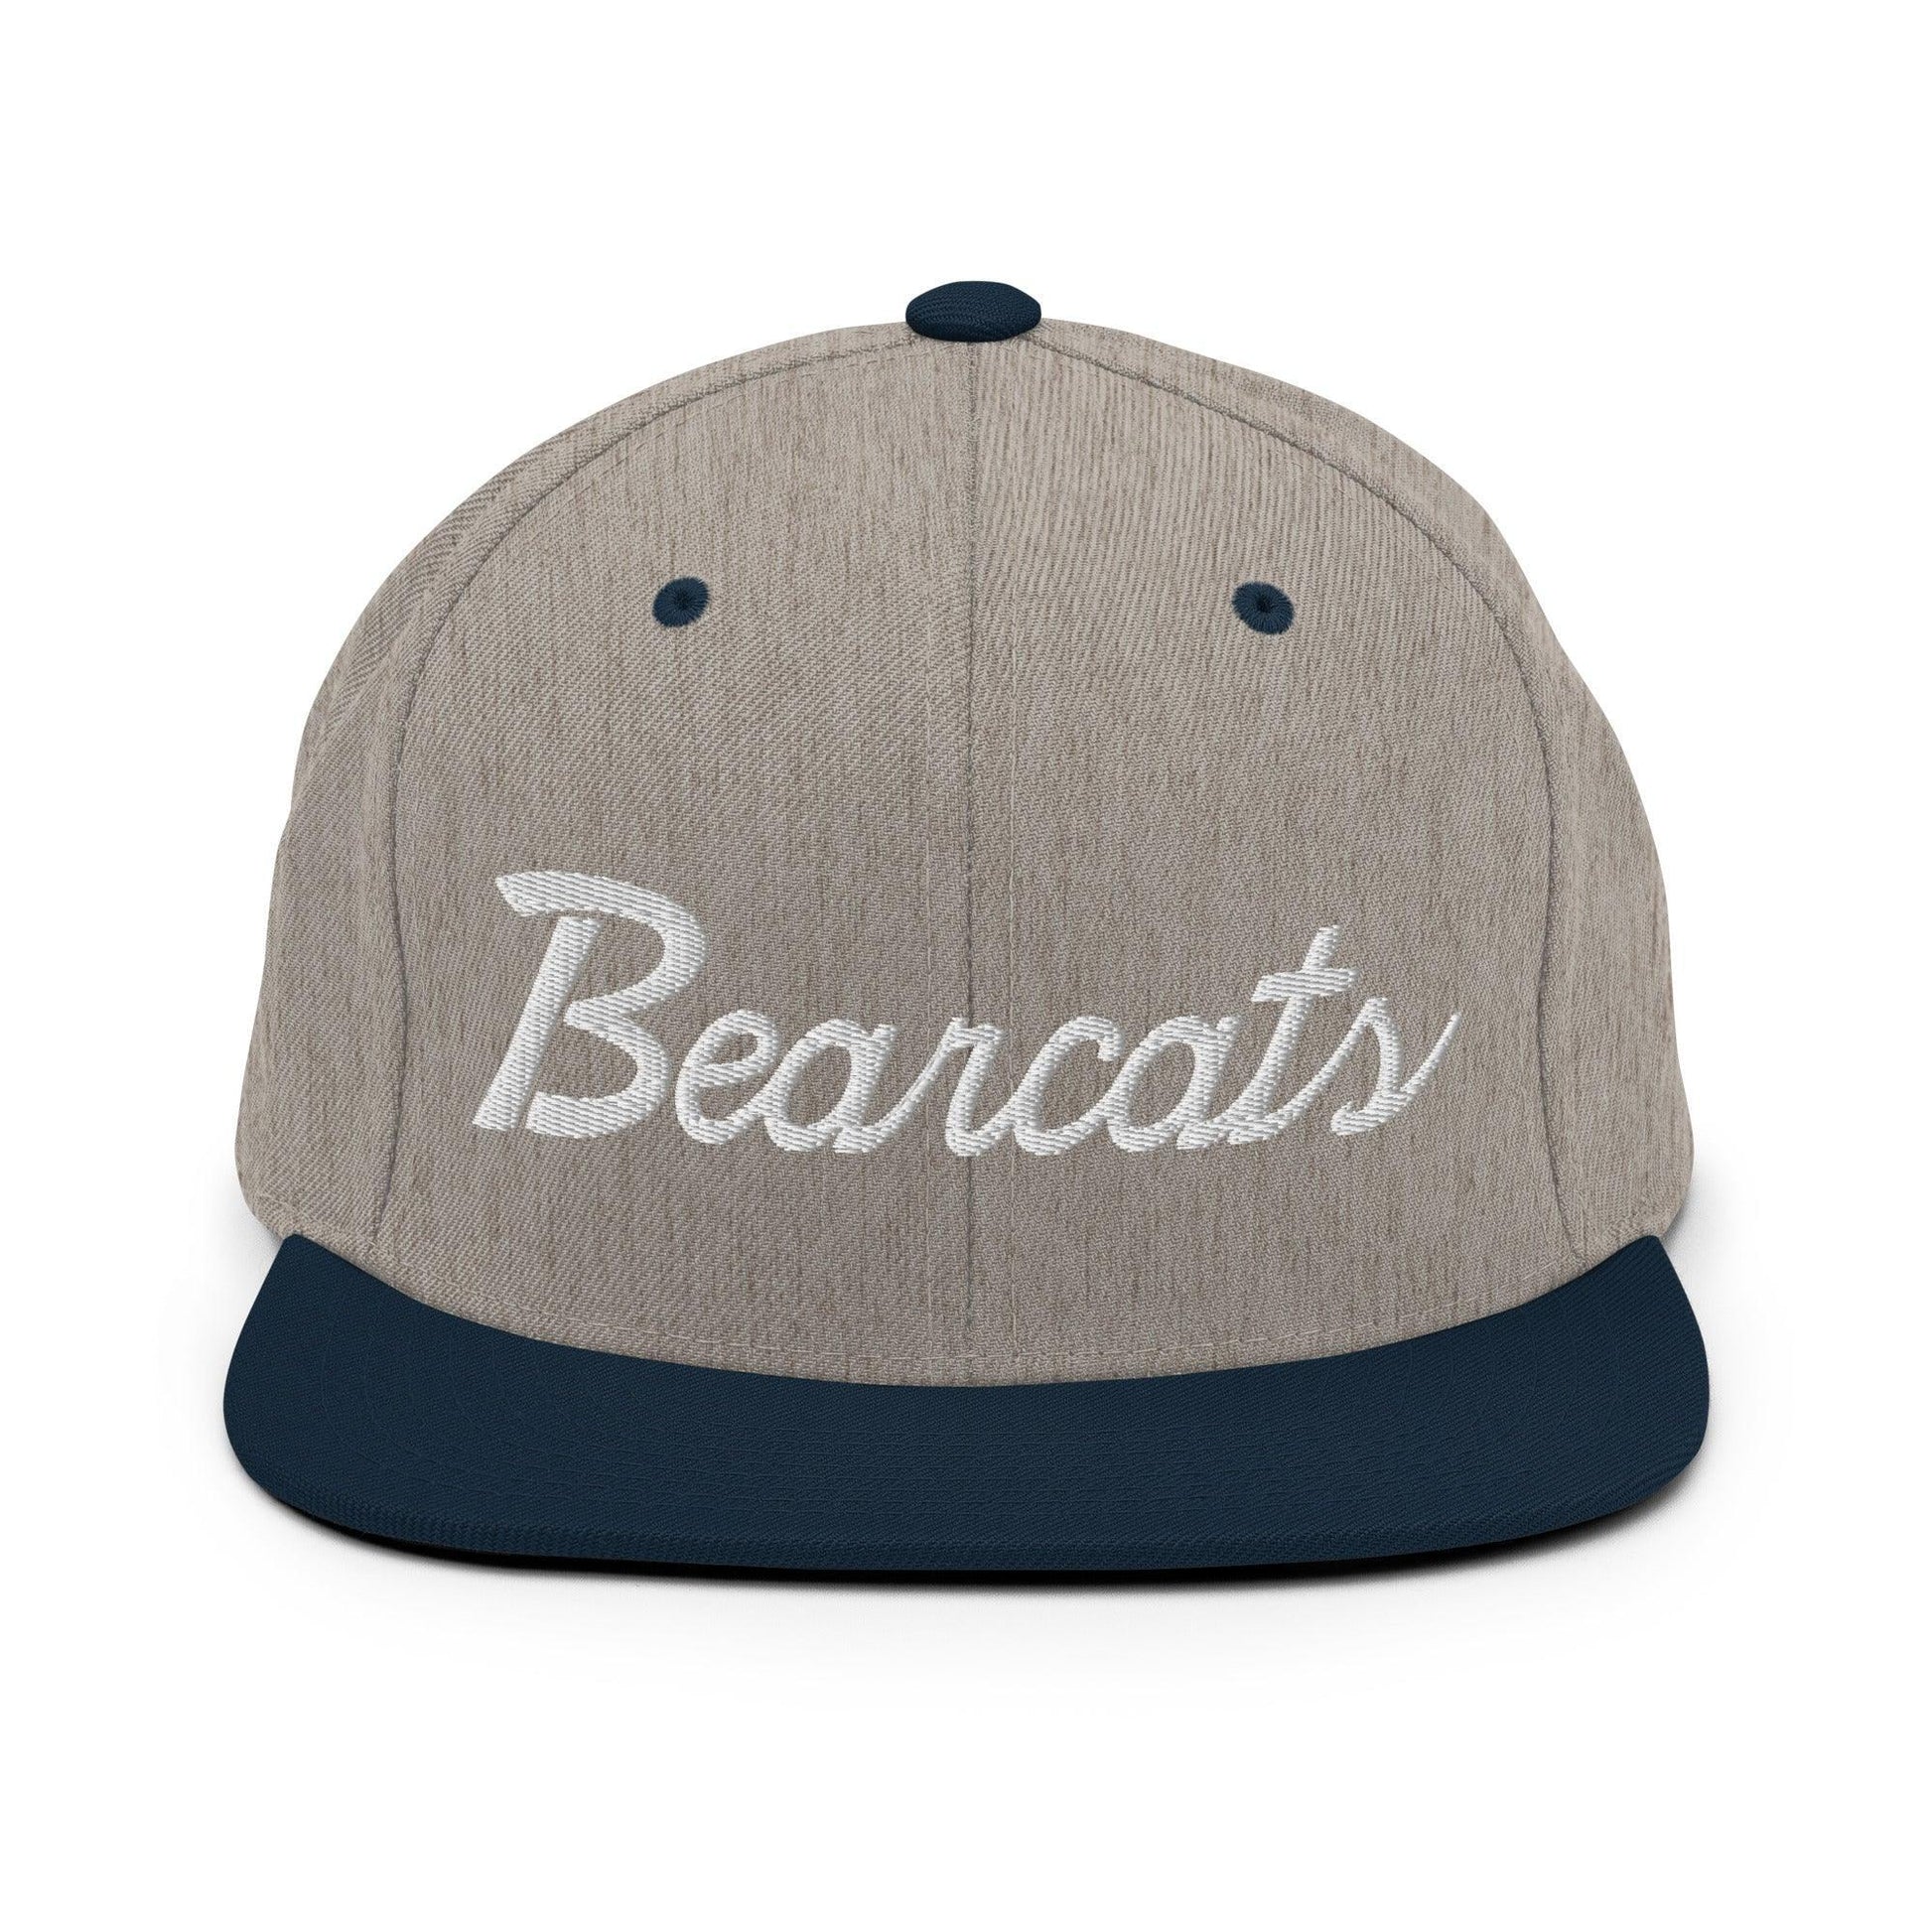 Bearcats School Mascot Script Snapback Hat Heather Grey/ Navy